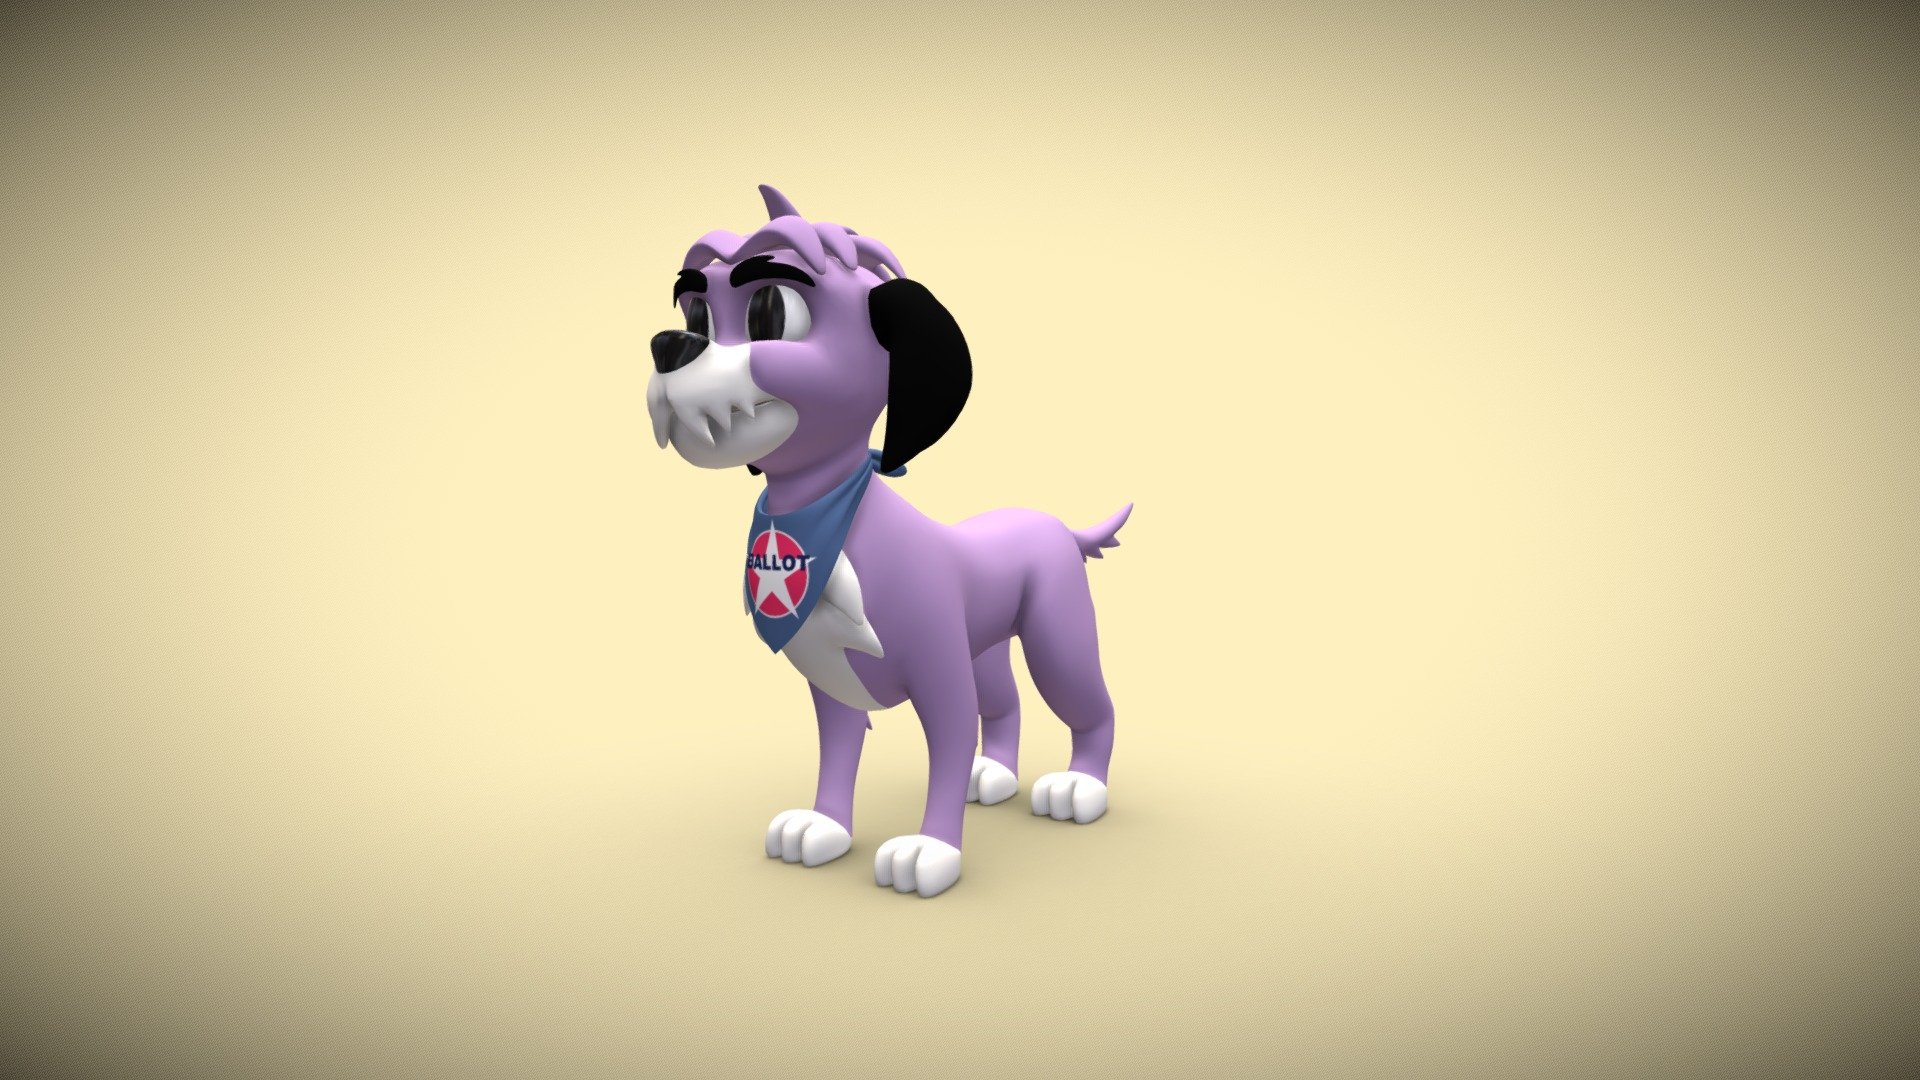 Cartoon dog modeled and textured in Autodesk Maya for MetaphorStudio - Cartoon dog - 3D model by Los Bionicos Animation Studio (@losbionicos) 3d model